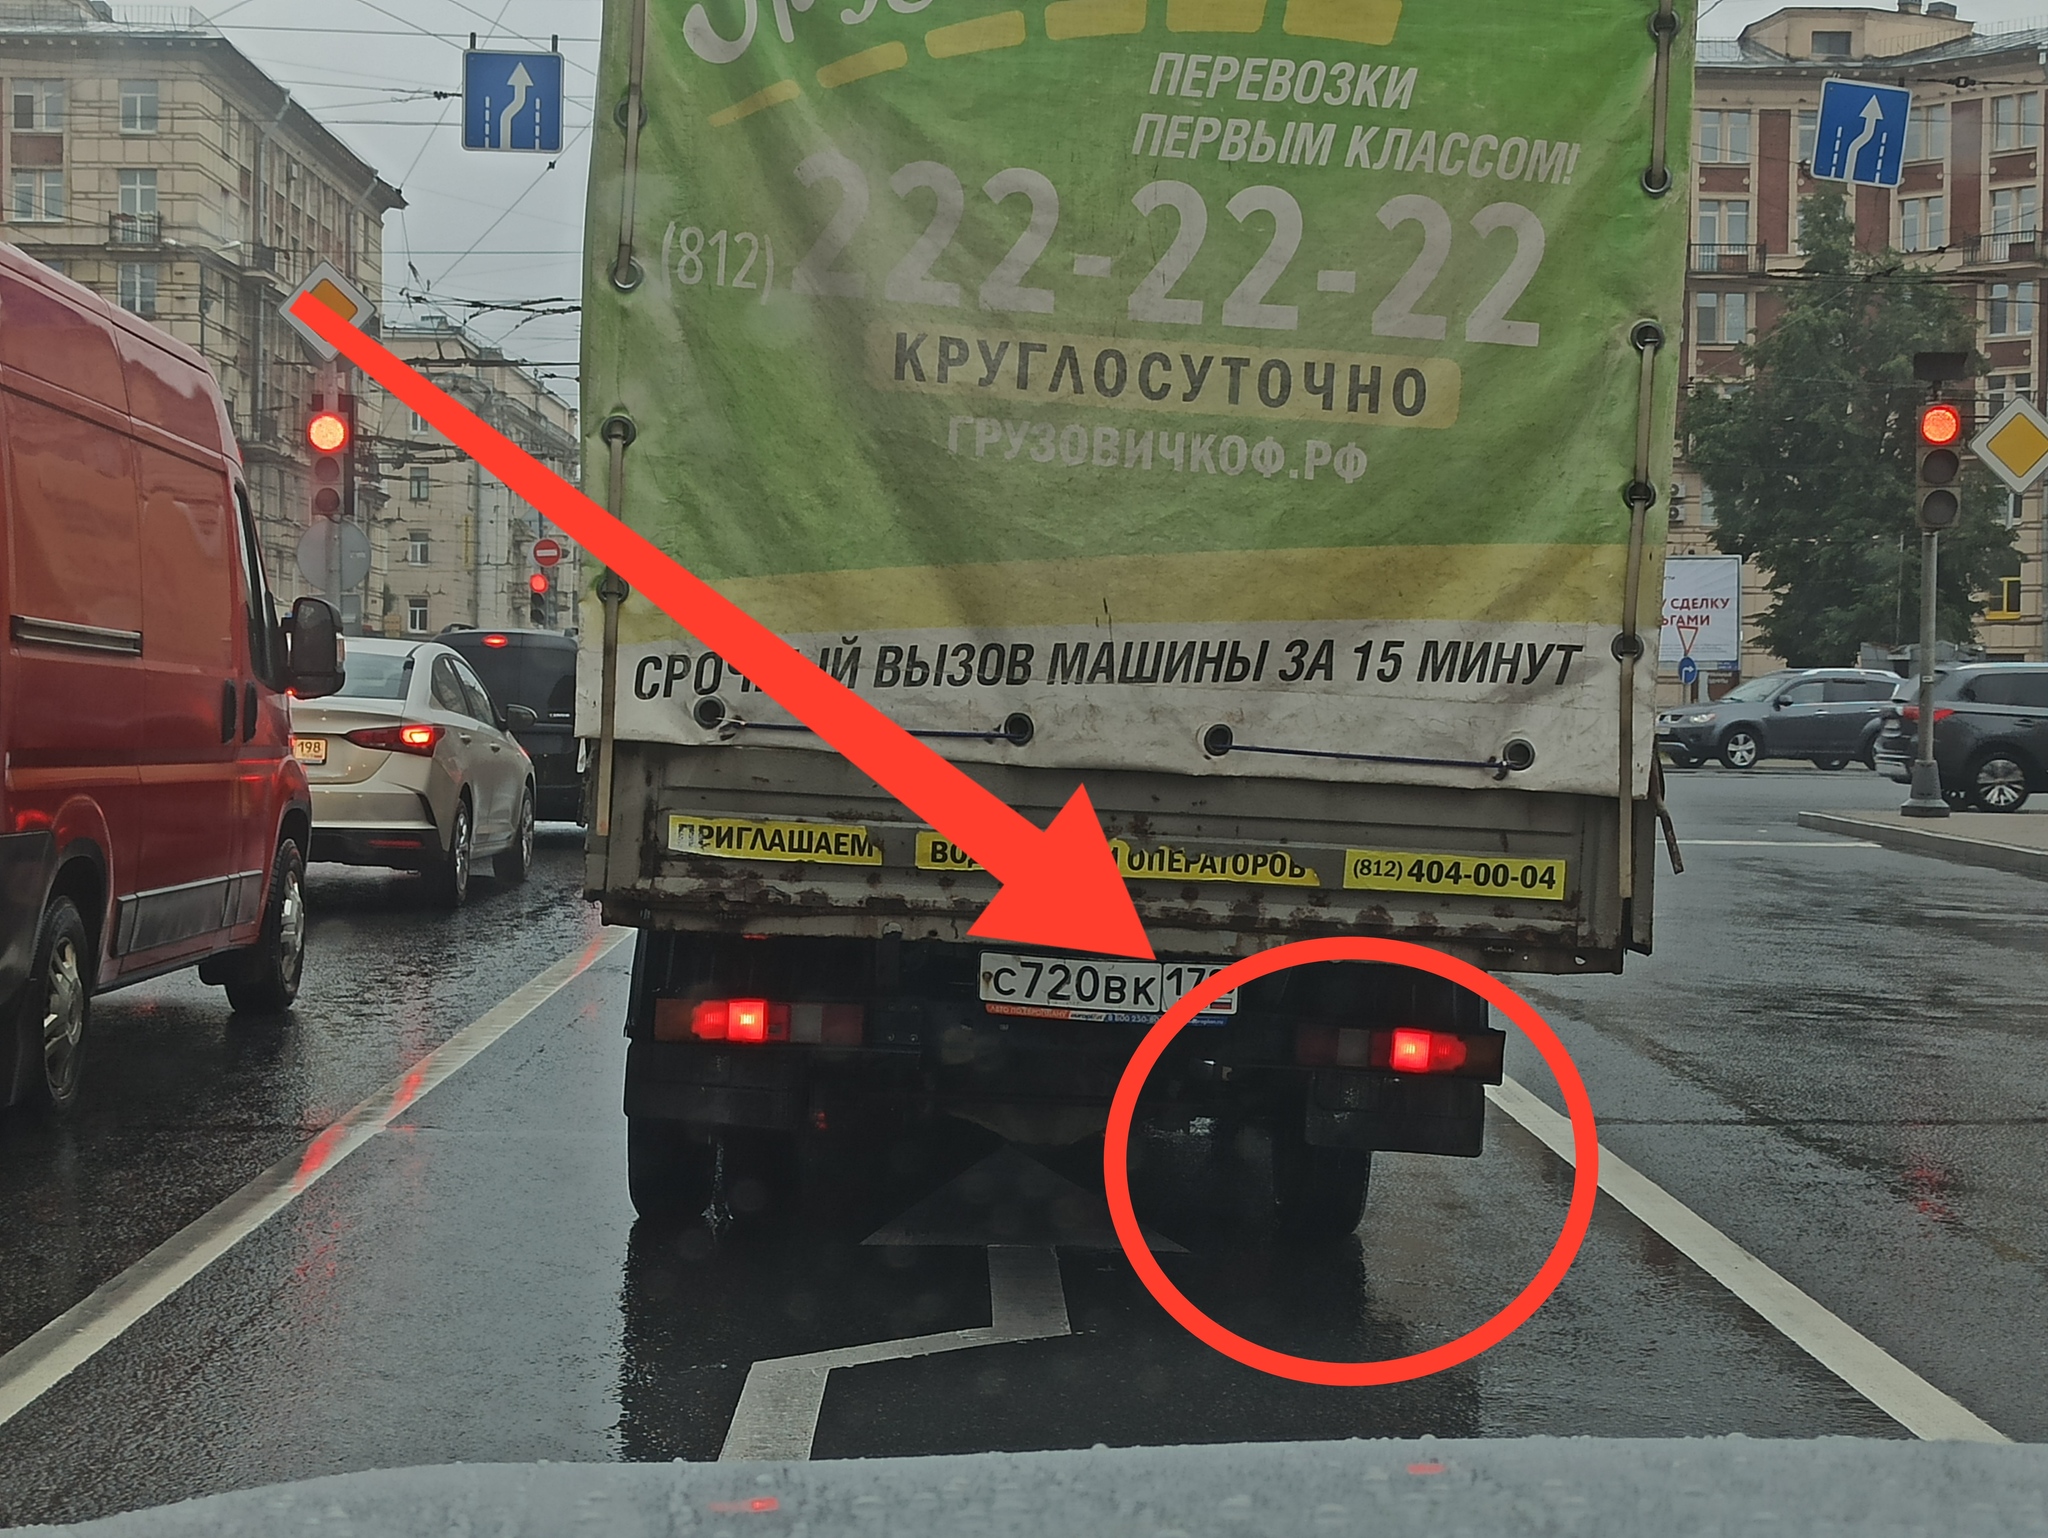 Odd Truck - Gruzovichkof, Negative, Saint Petersburg, Safety, Traffic rules